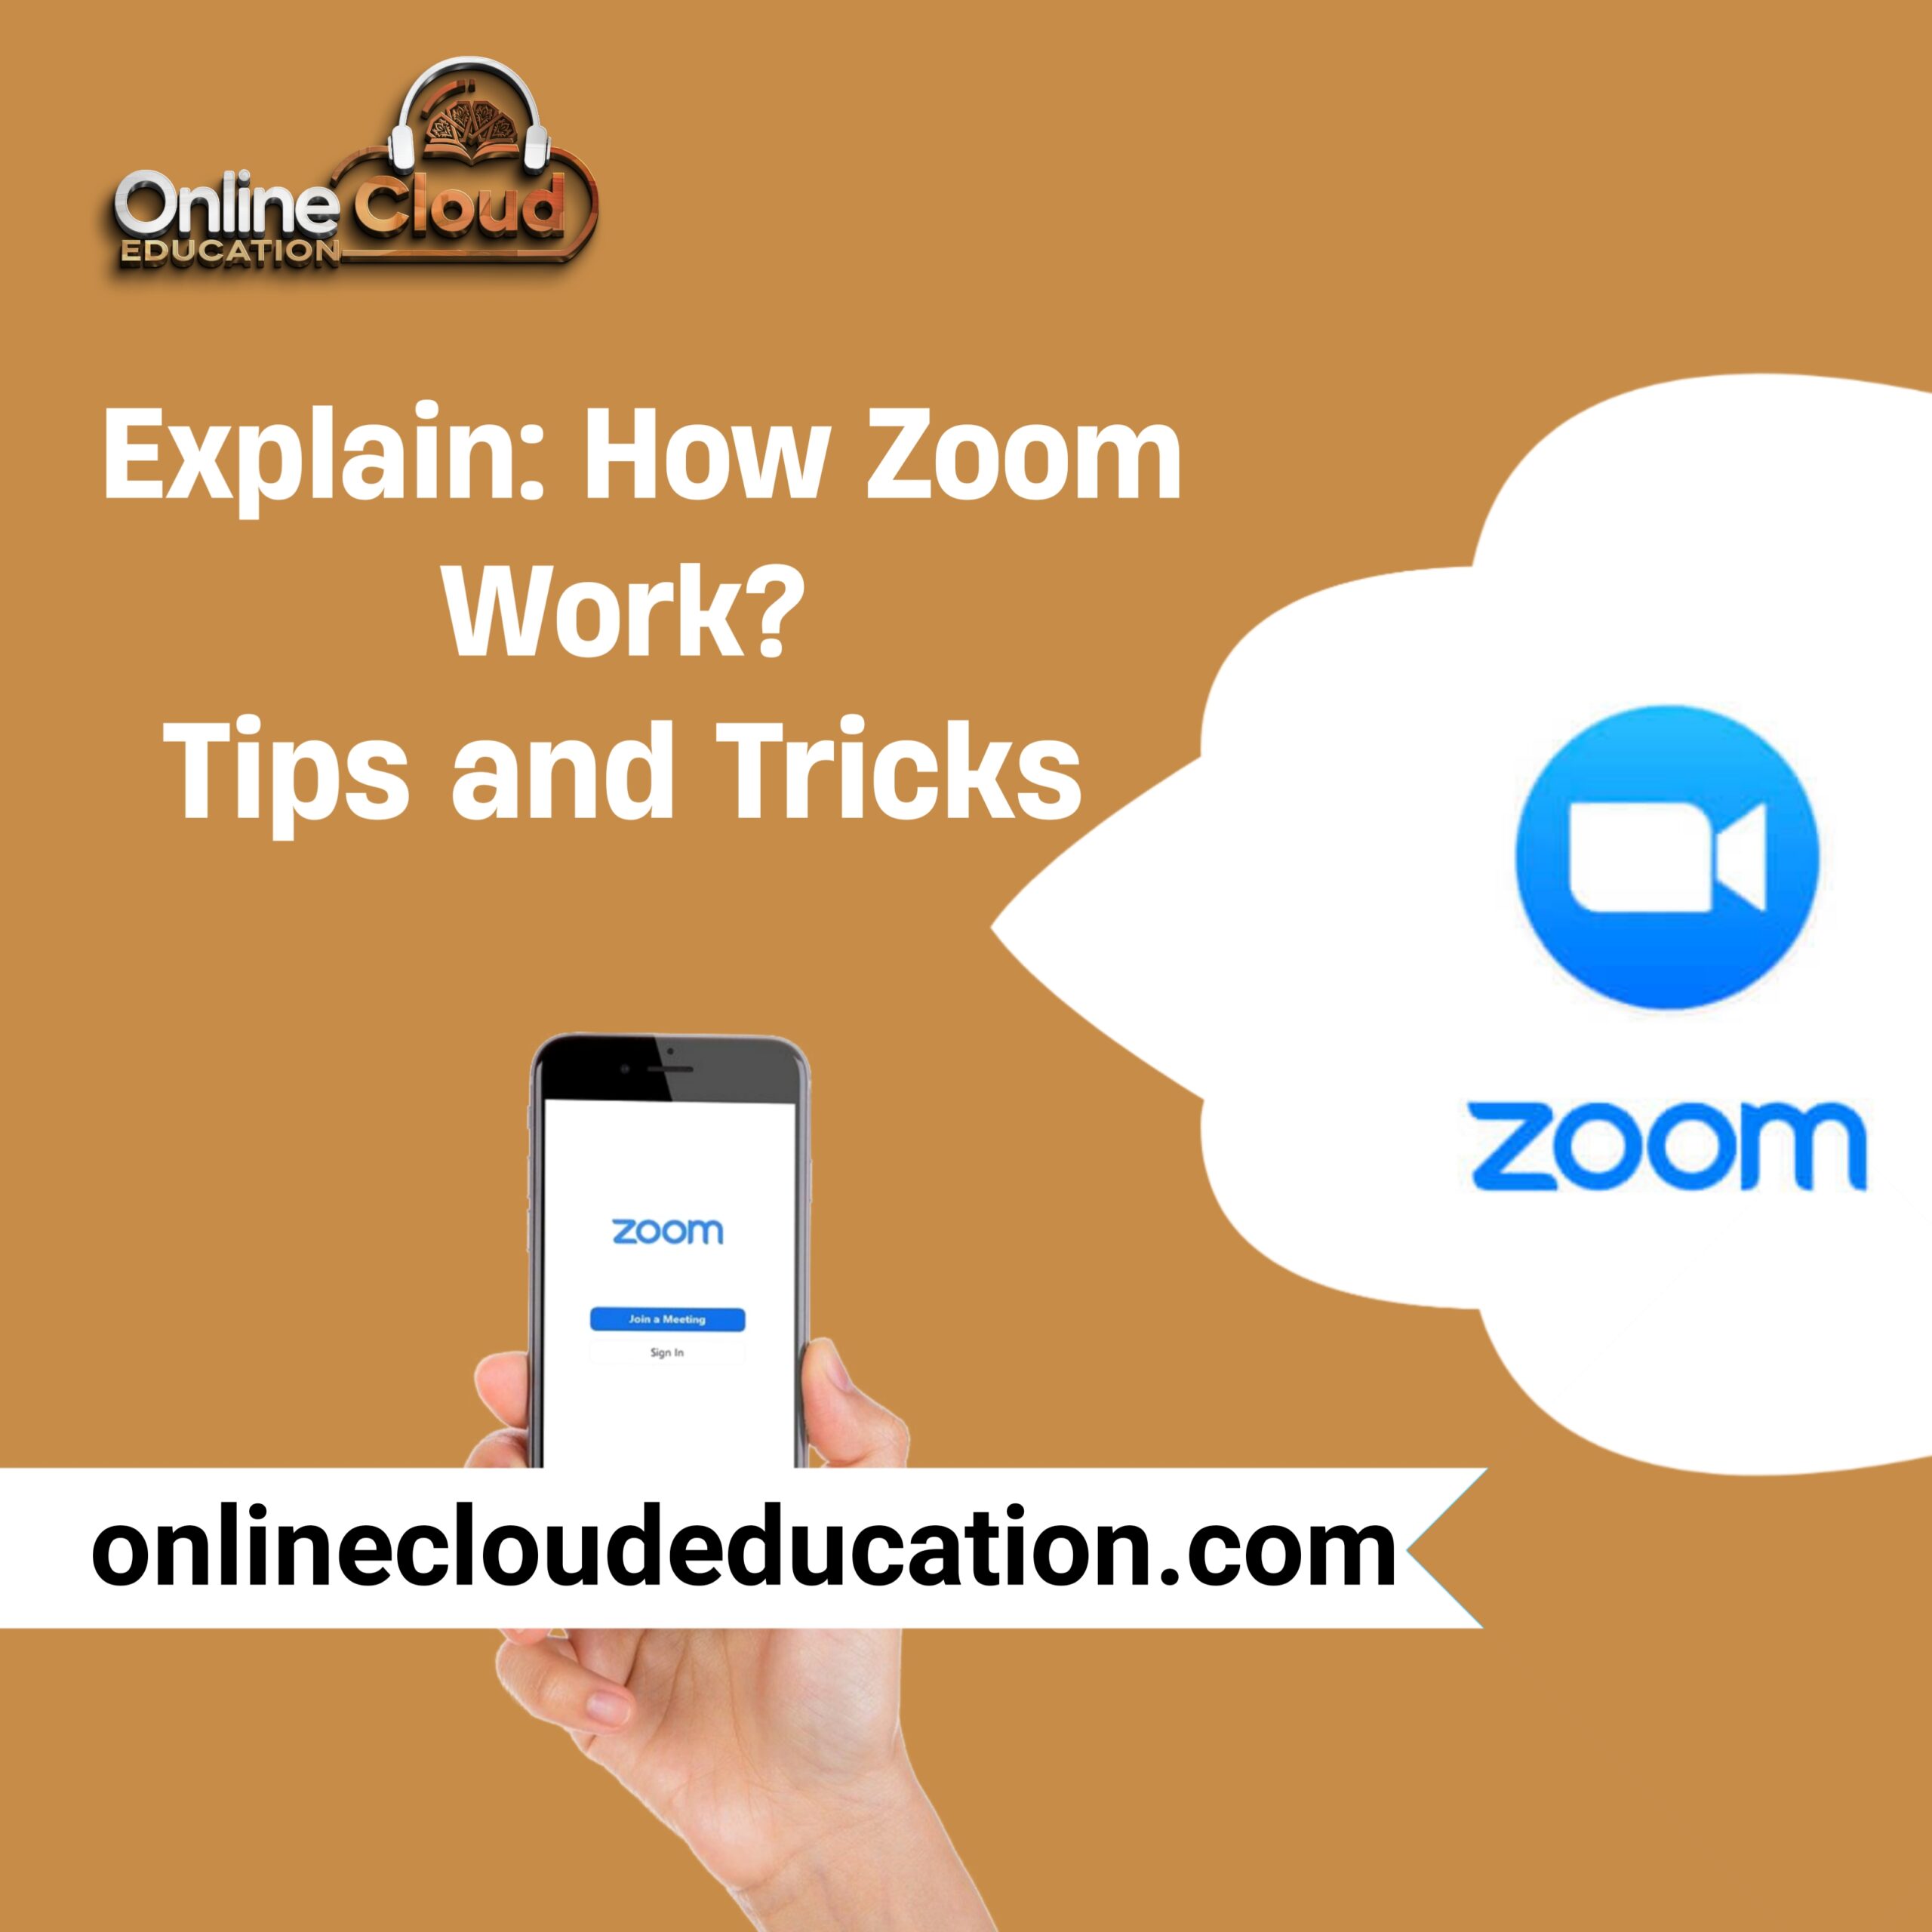 Explain: How Zoom work?